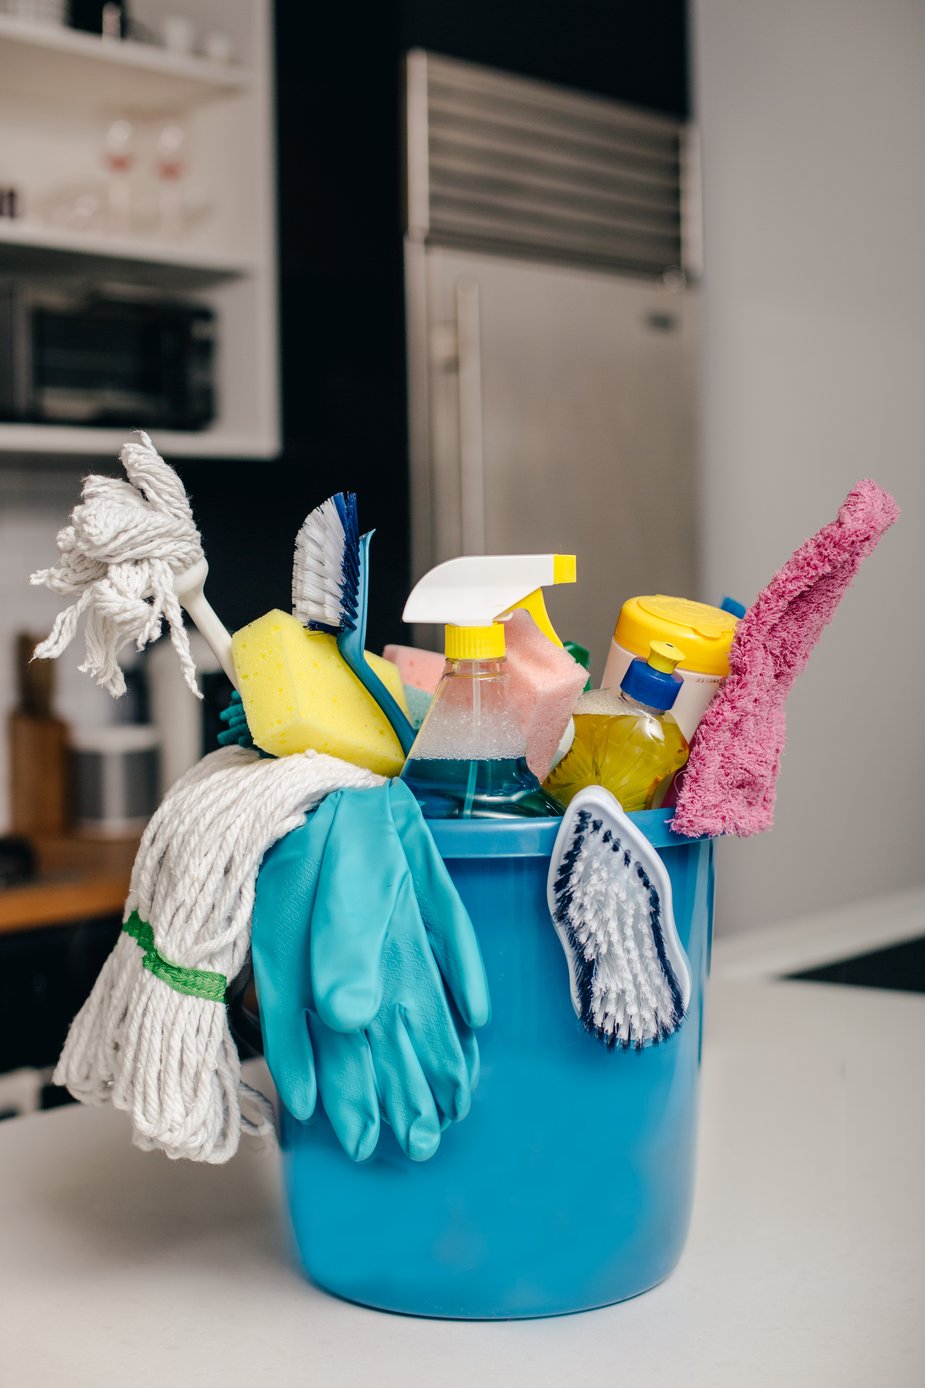 cleaning-supply-bucket-in-kitchen_925x